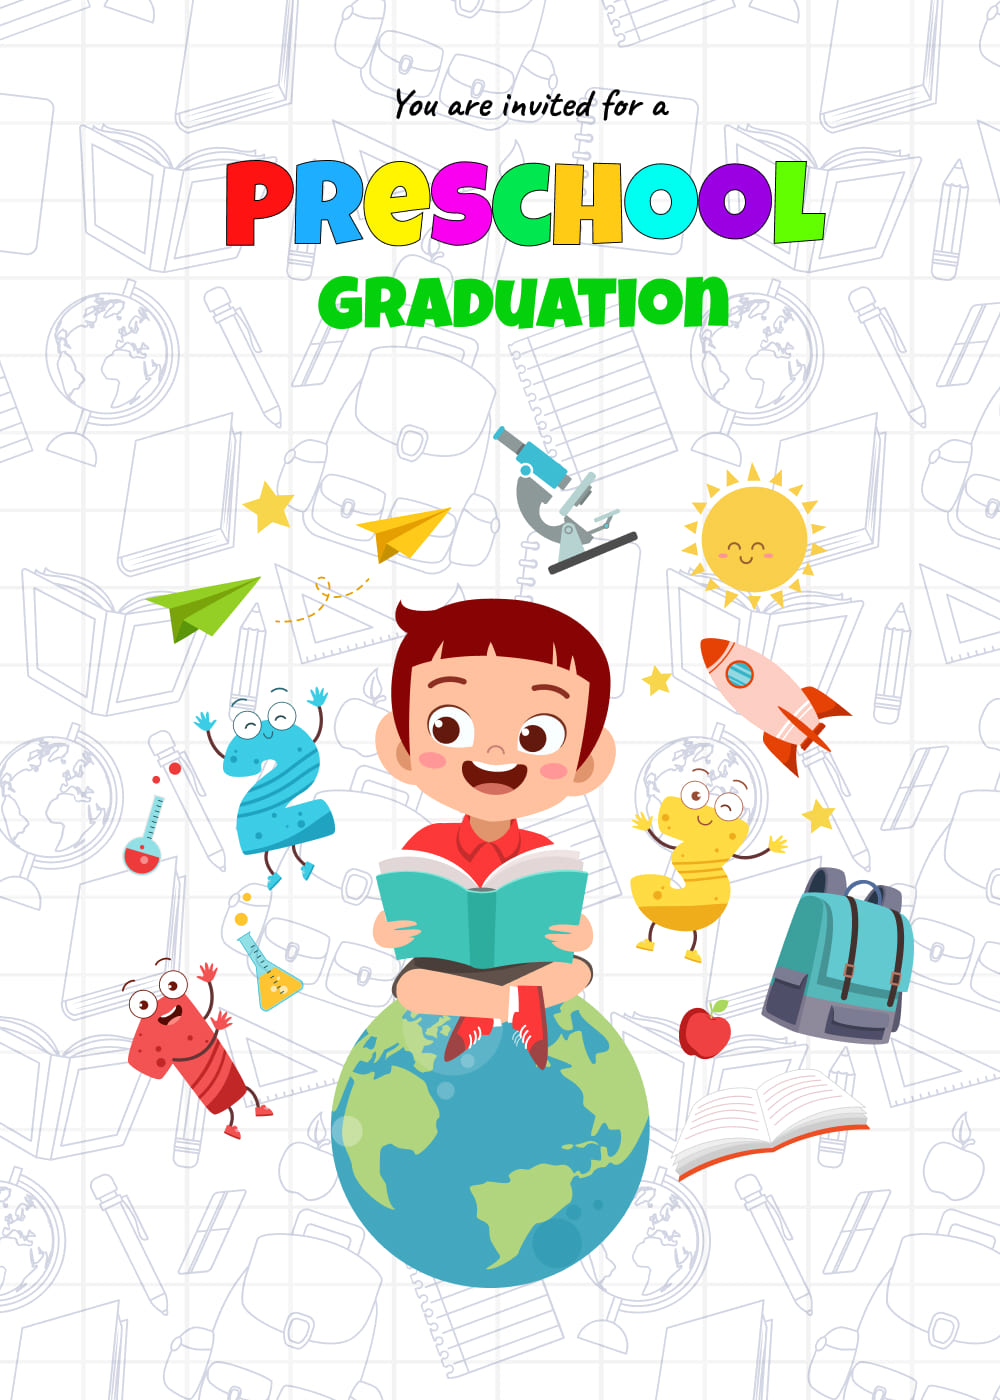 Preschool graduation invite template with kid.